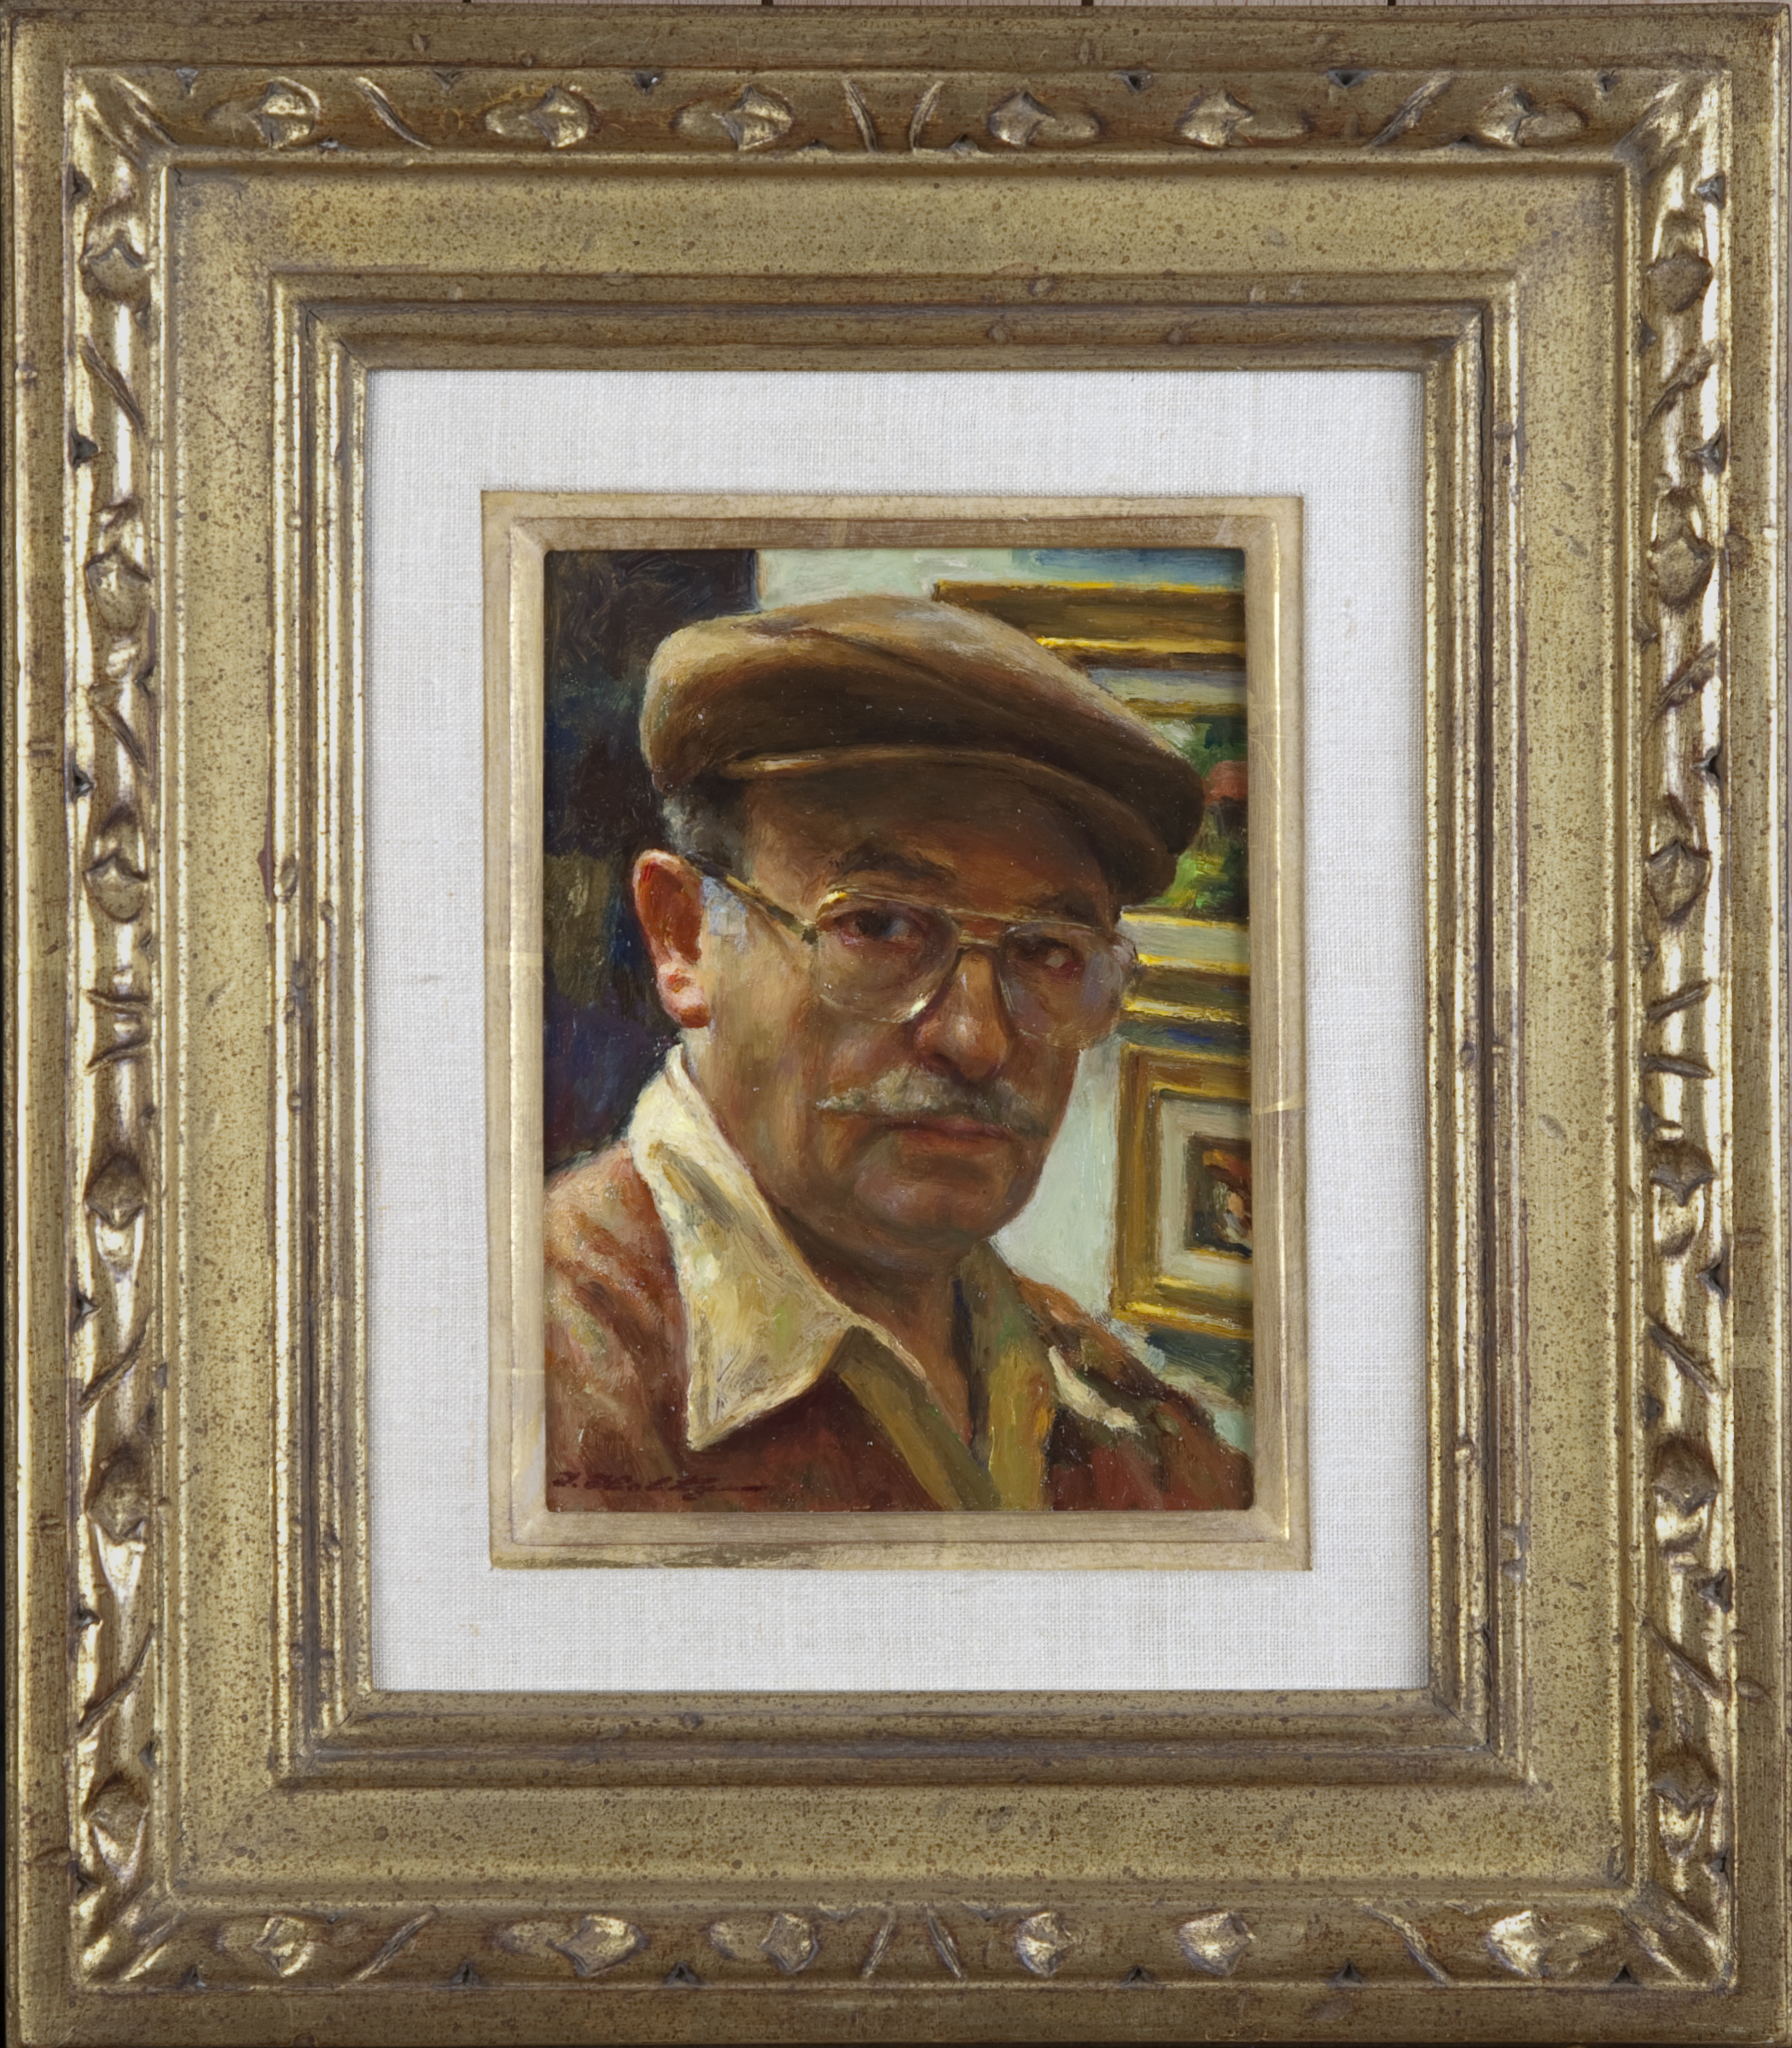 072 Self Portrait 1983 - Oil on Masonite - 7.5 x 5.5 - Frame: 13.25 x 15.5 x 2